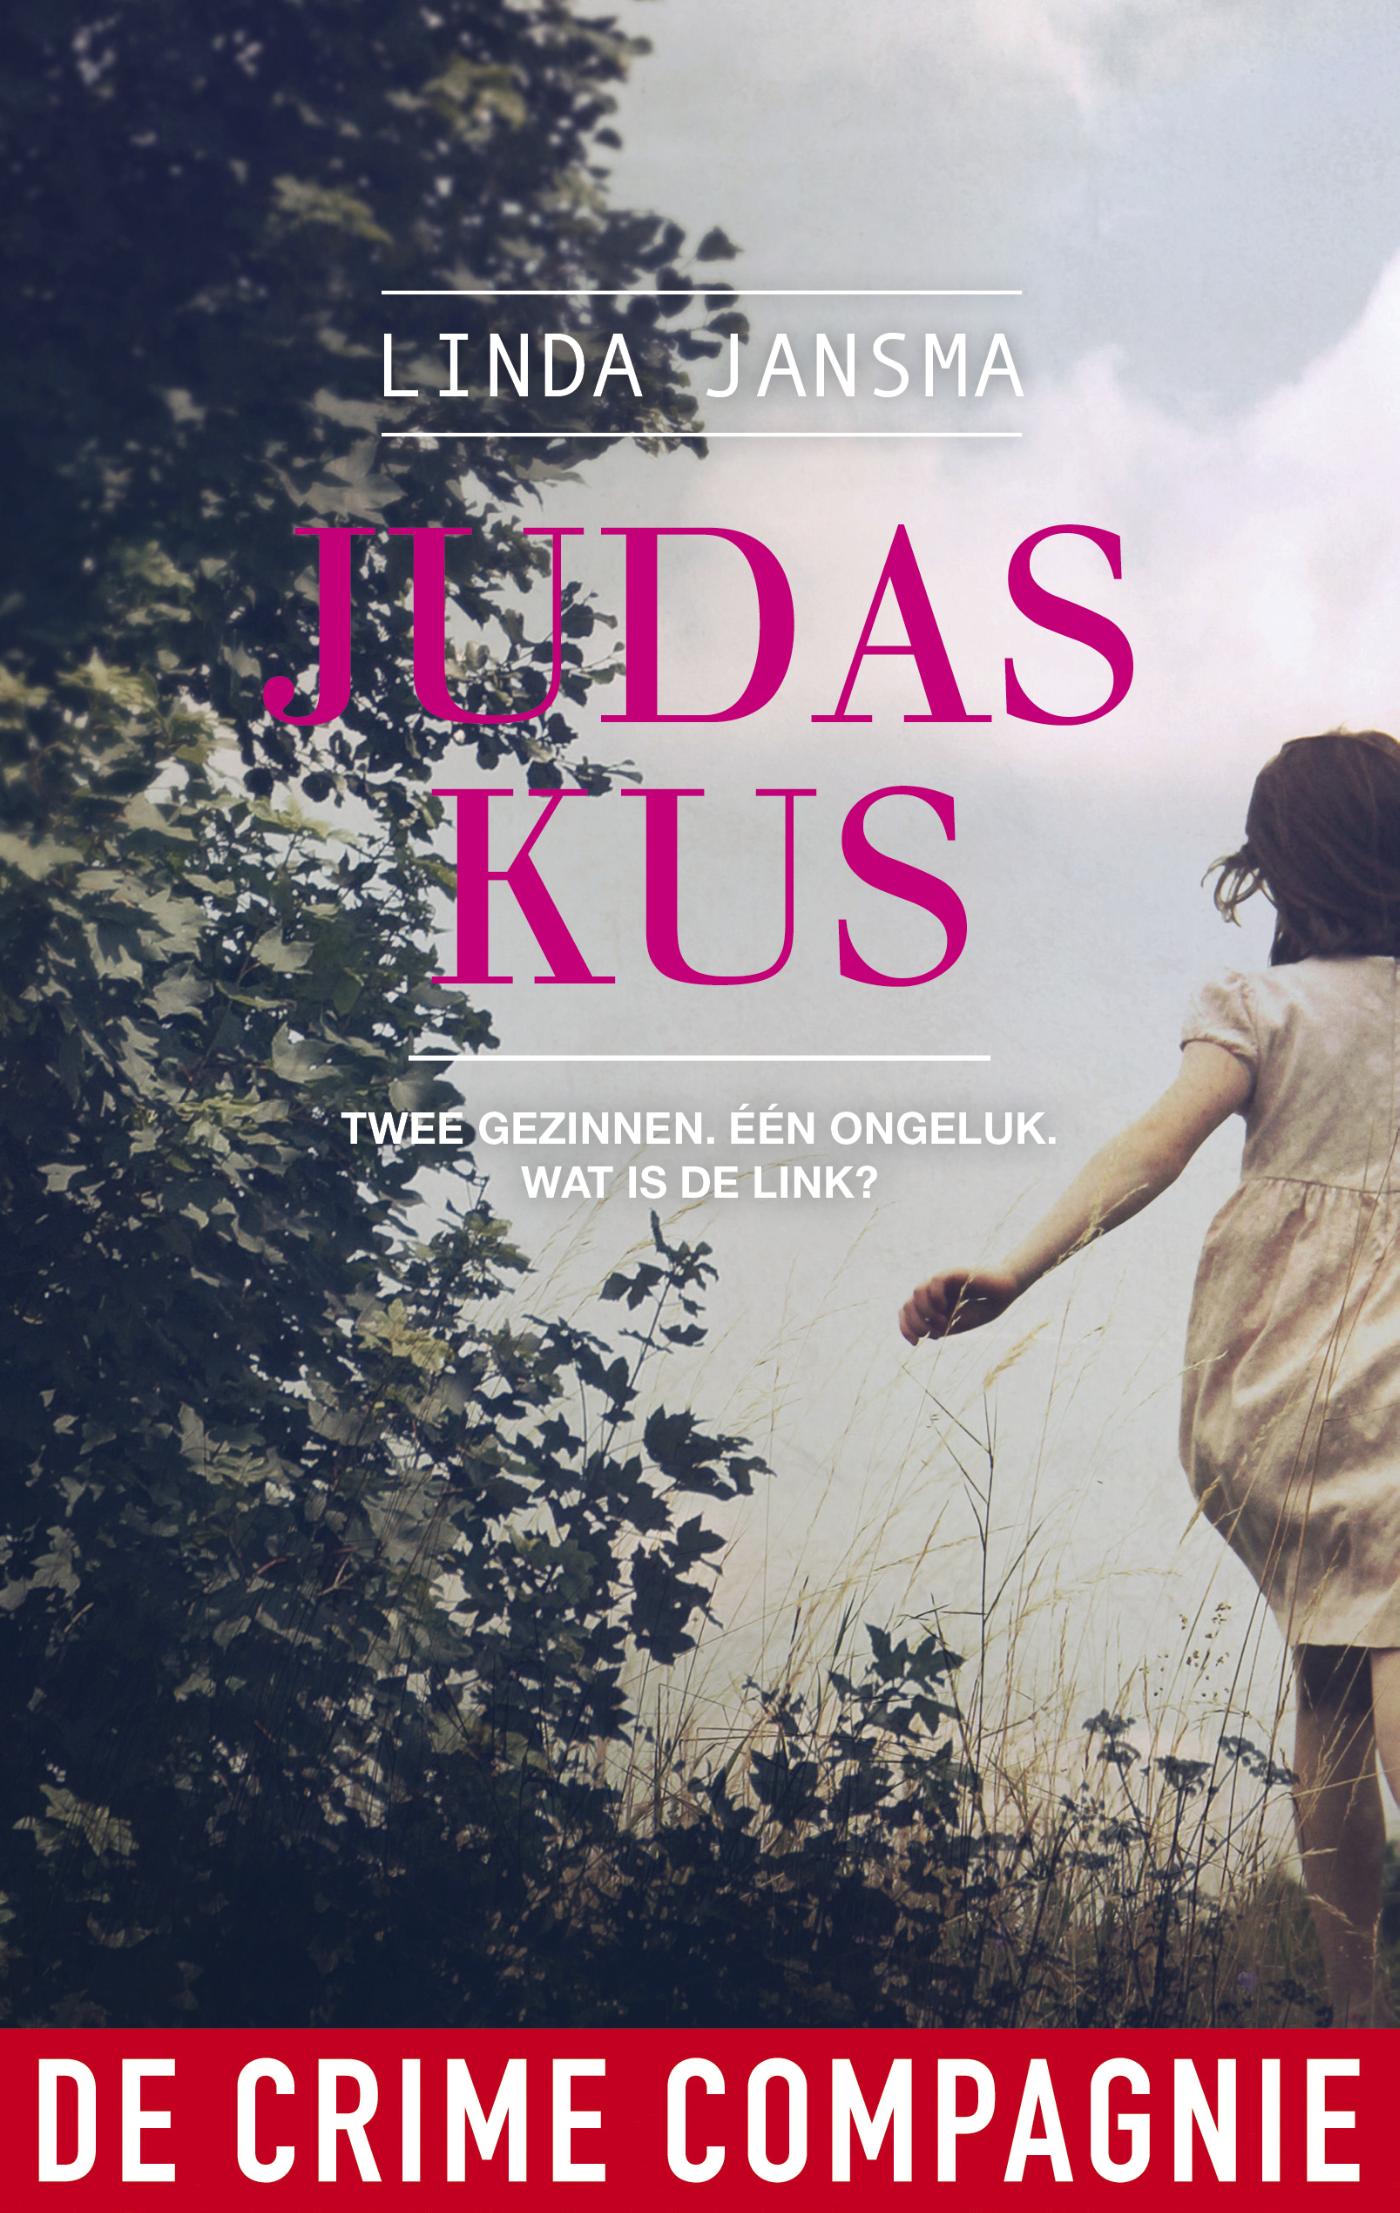 Judaskus (Ebook)